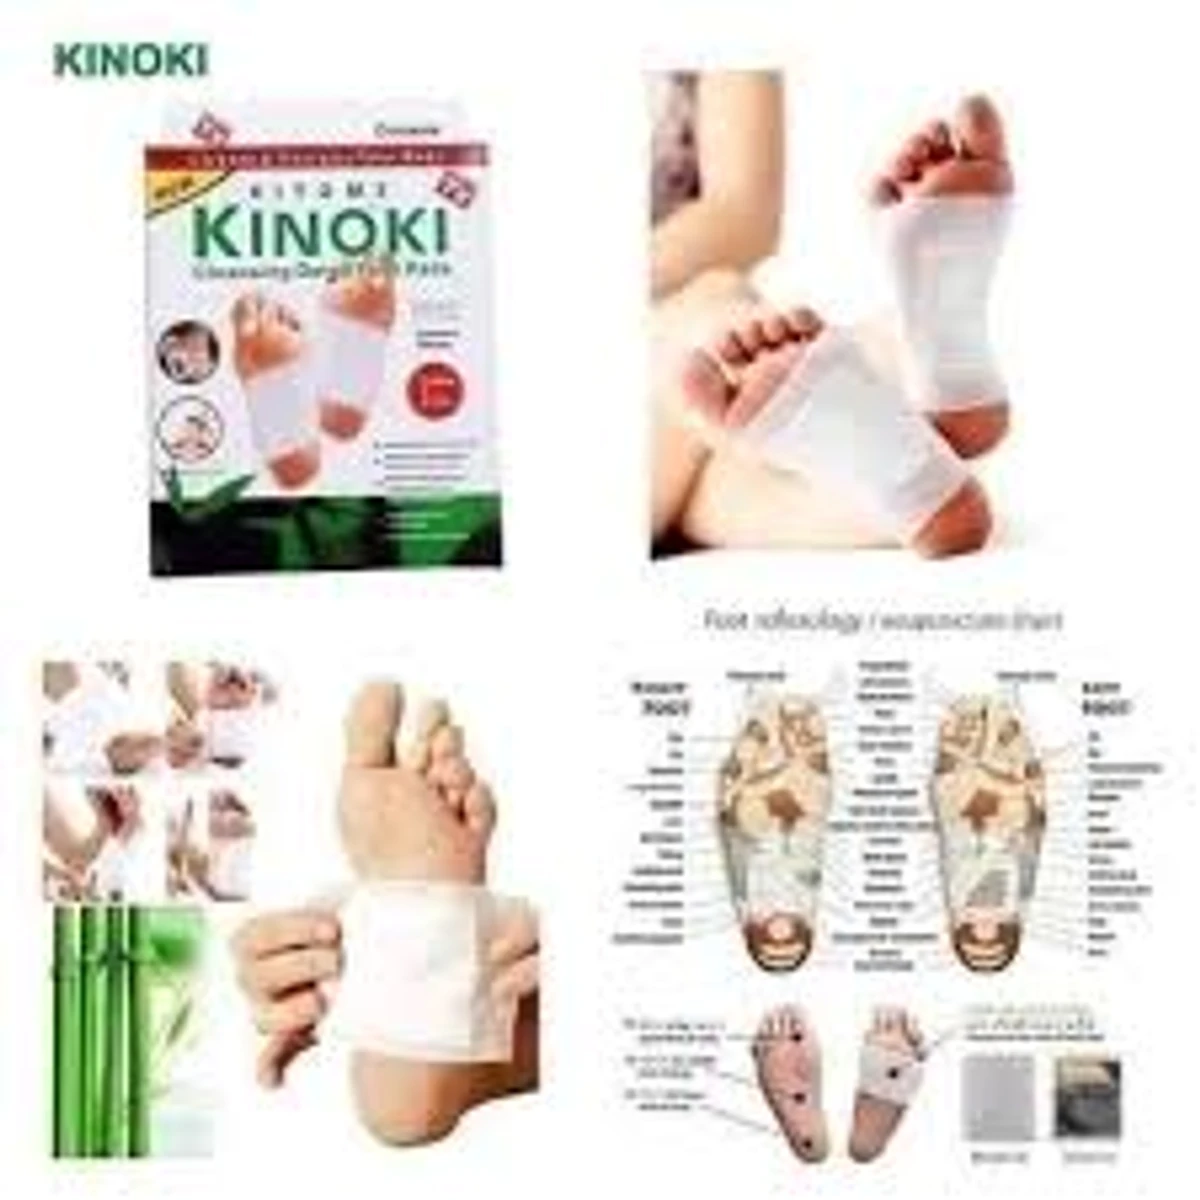 Original kinoki detox foot pad 4 Packet (40 pcs Full Course)